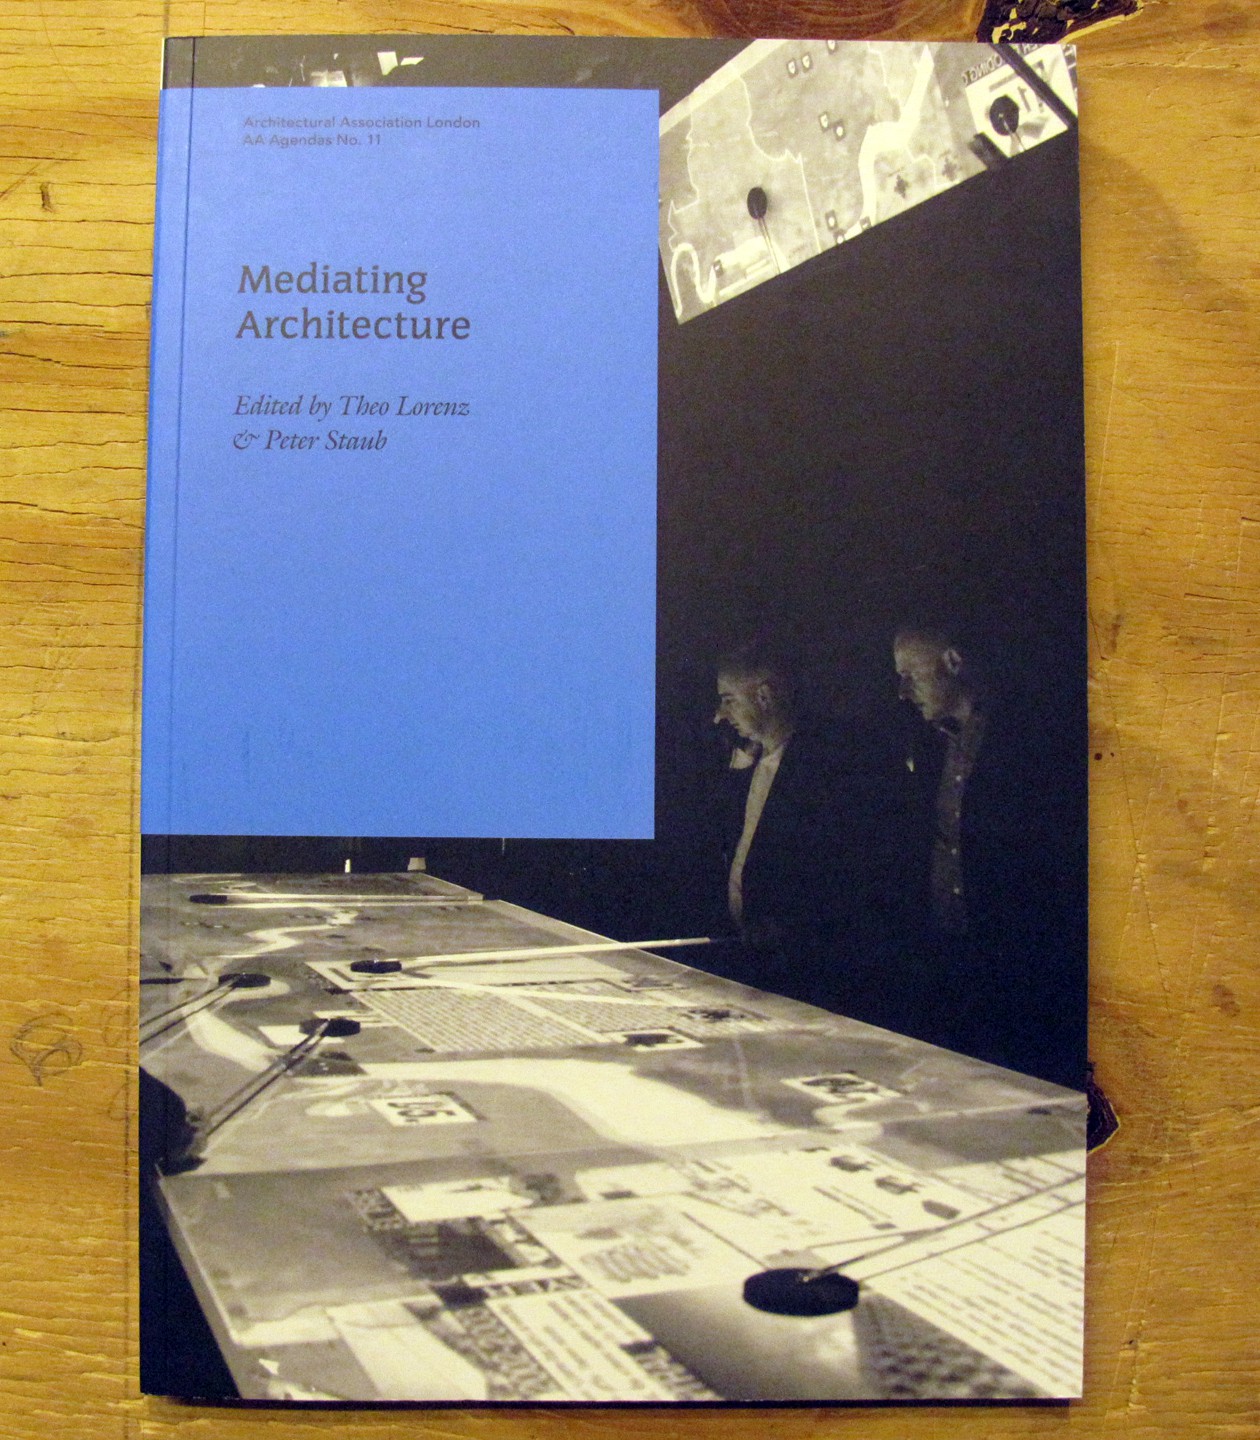  - mediating_architecture_theo_lorenz_peter_straub_architectural_association_motto_distribution_01